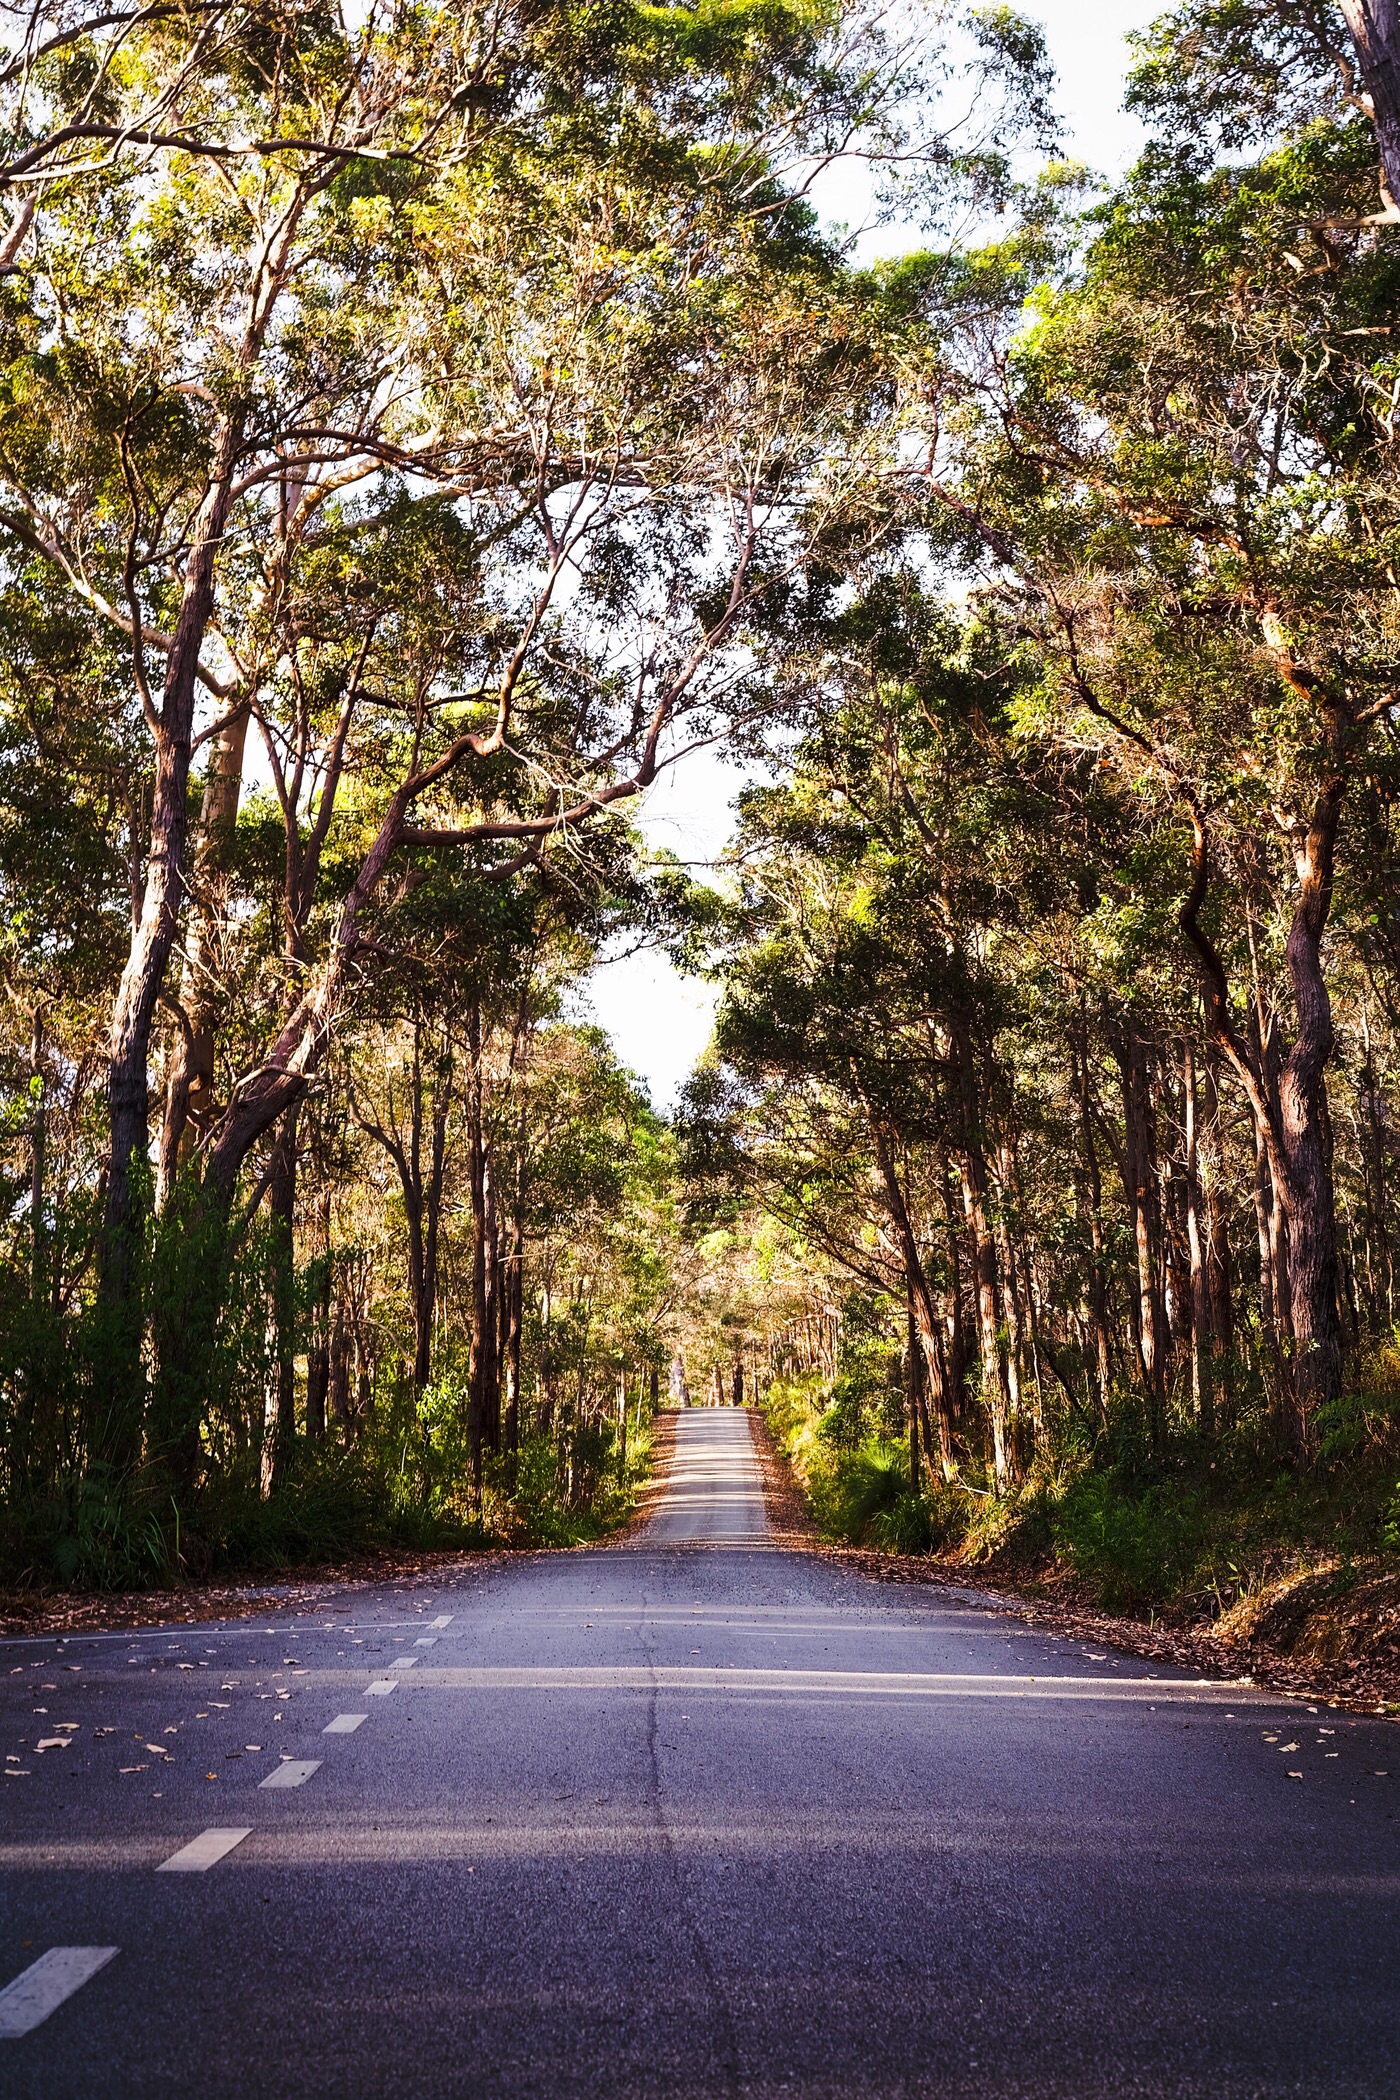 The roads of Western Australia